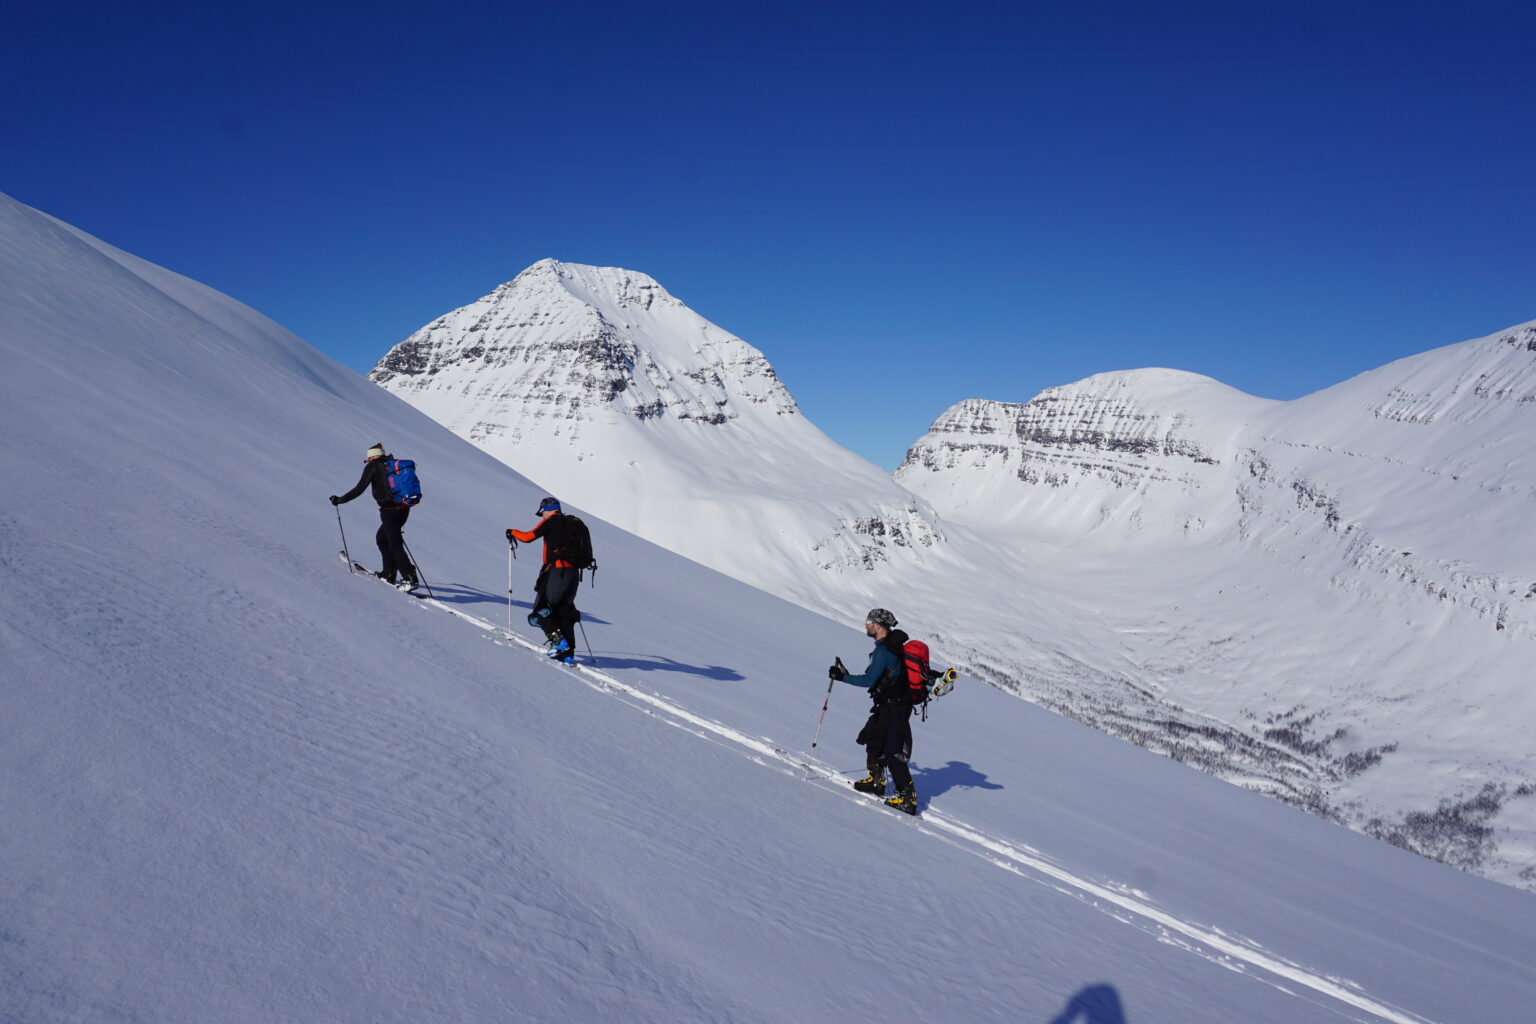 Finding powder snow on the Sjufjellet Northeast bowl